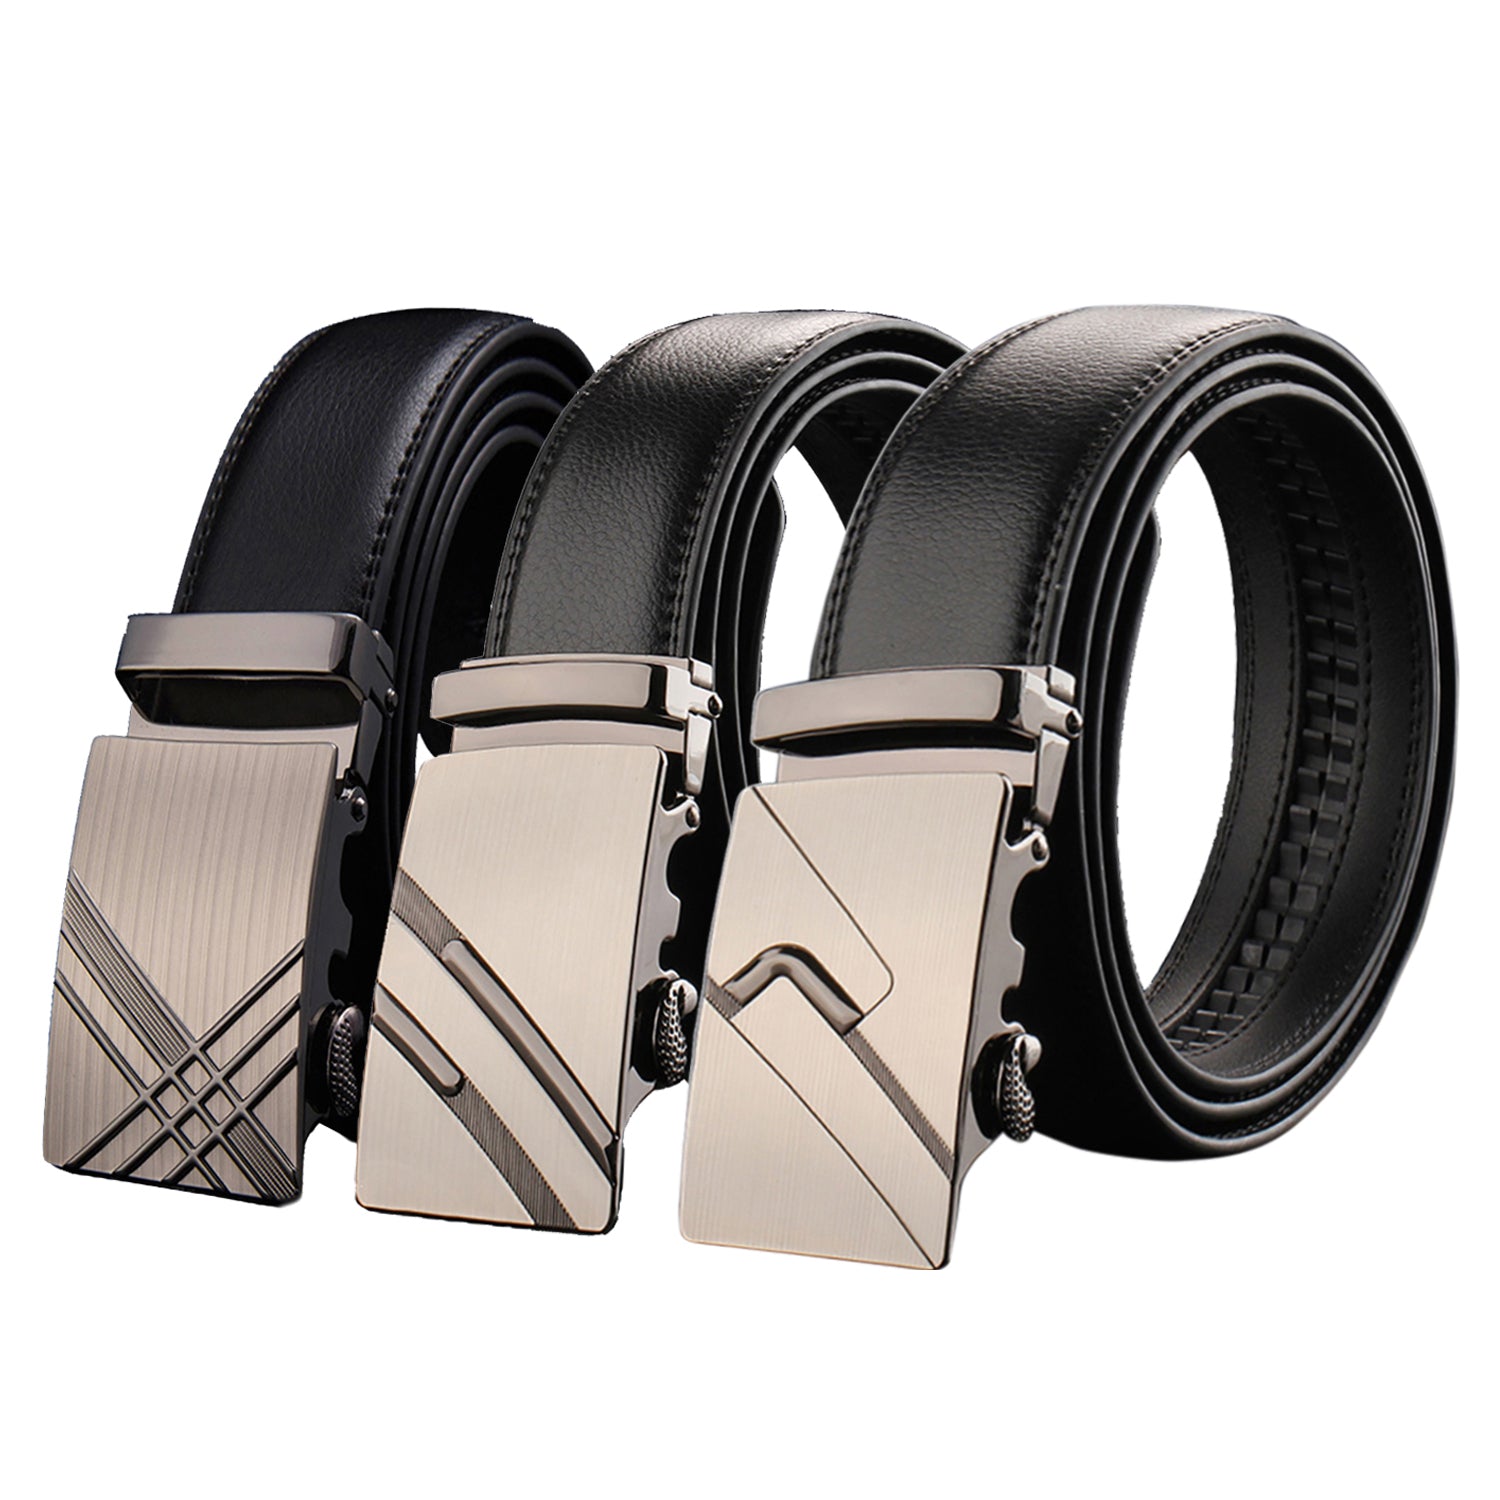 Adjustable Slide Luxury Leather Belt For Men's Automatic Buckle Ratchet Business Dress Belts